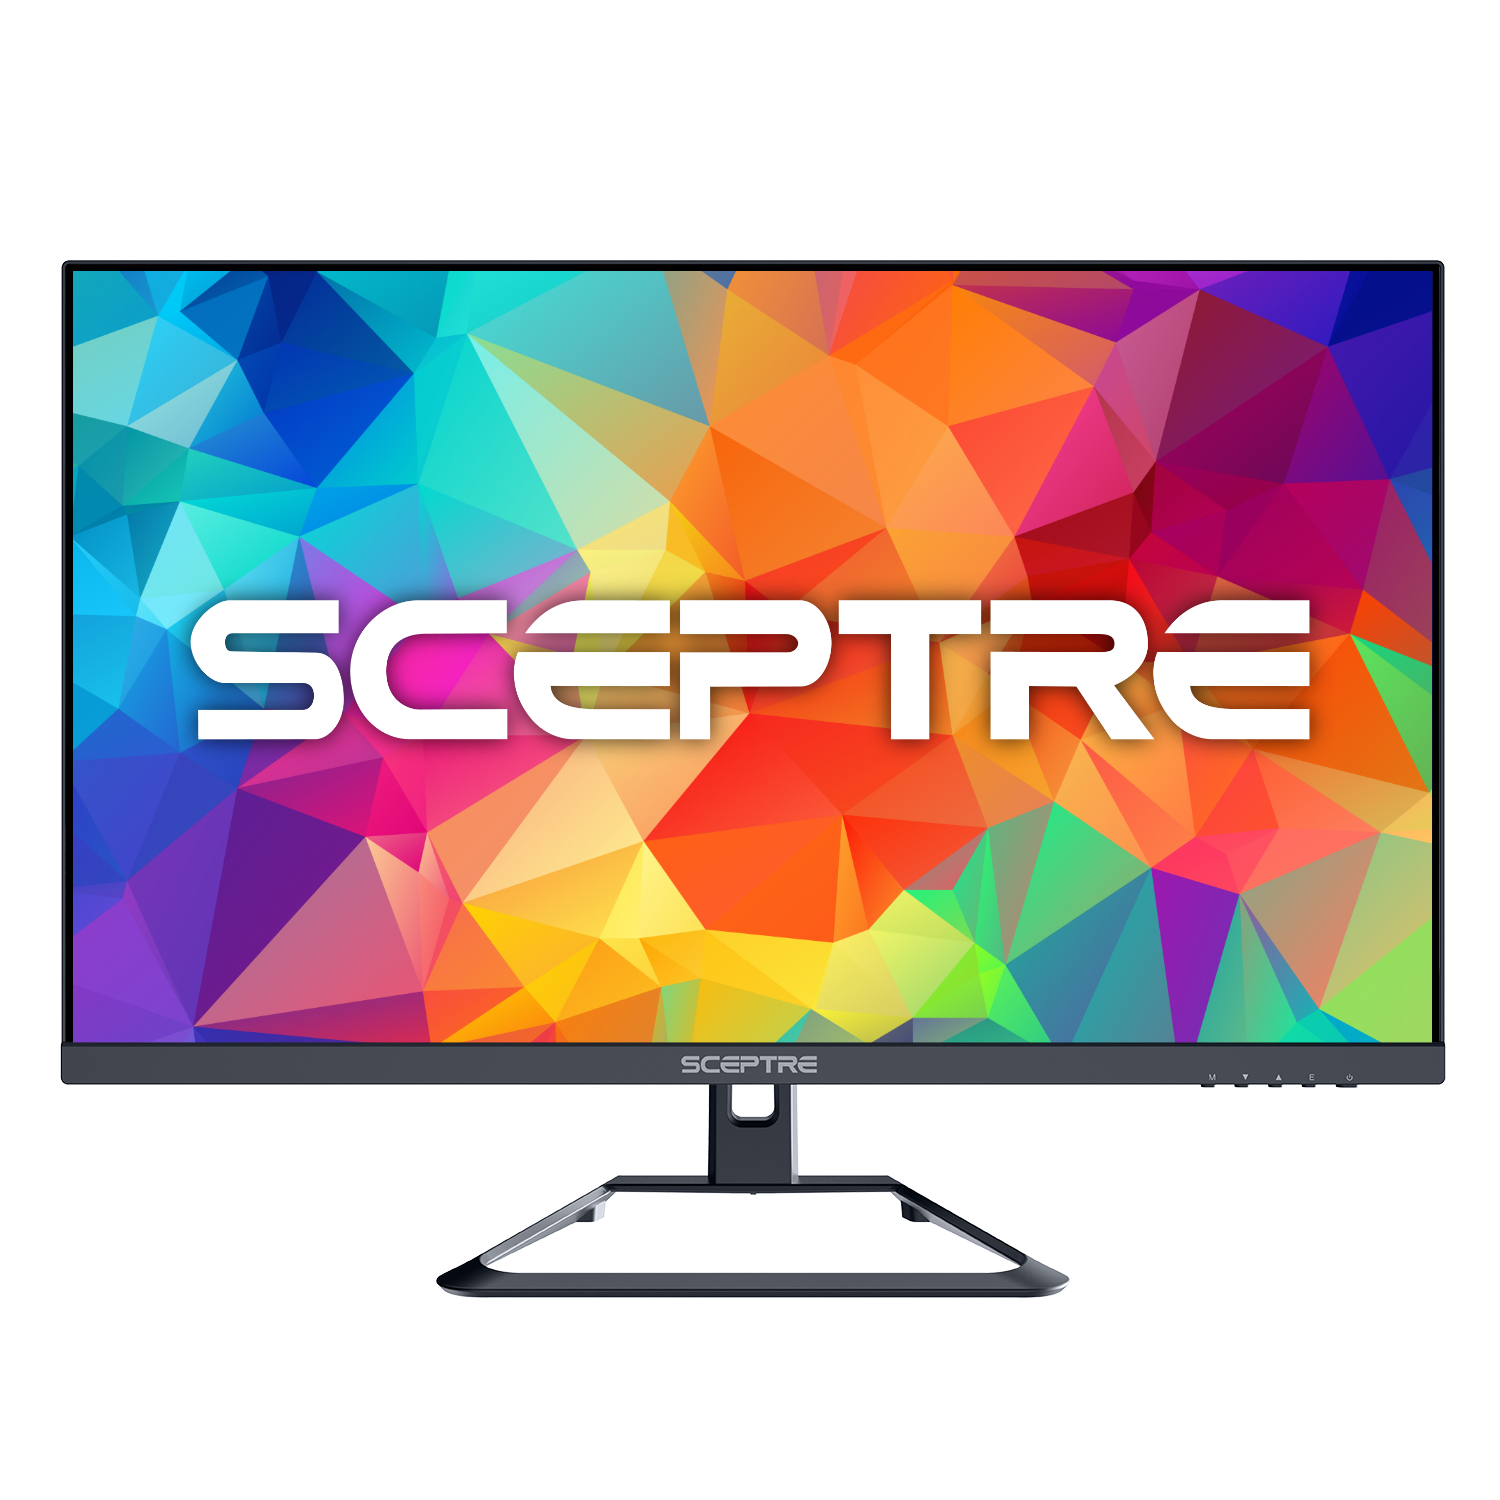 Sceptre 4K IPS 27" 3840 x 2160 UHD Monitor up to 70Hz DisplayPort HDMI 99% sRGB Build-in Speakers, Machine Black (U275W-UPT) - image 1 of 7